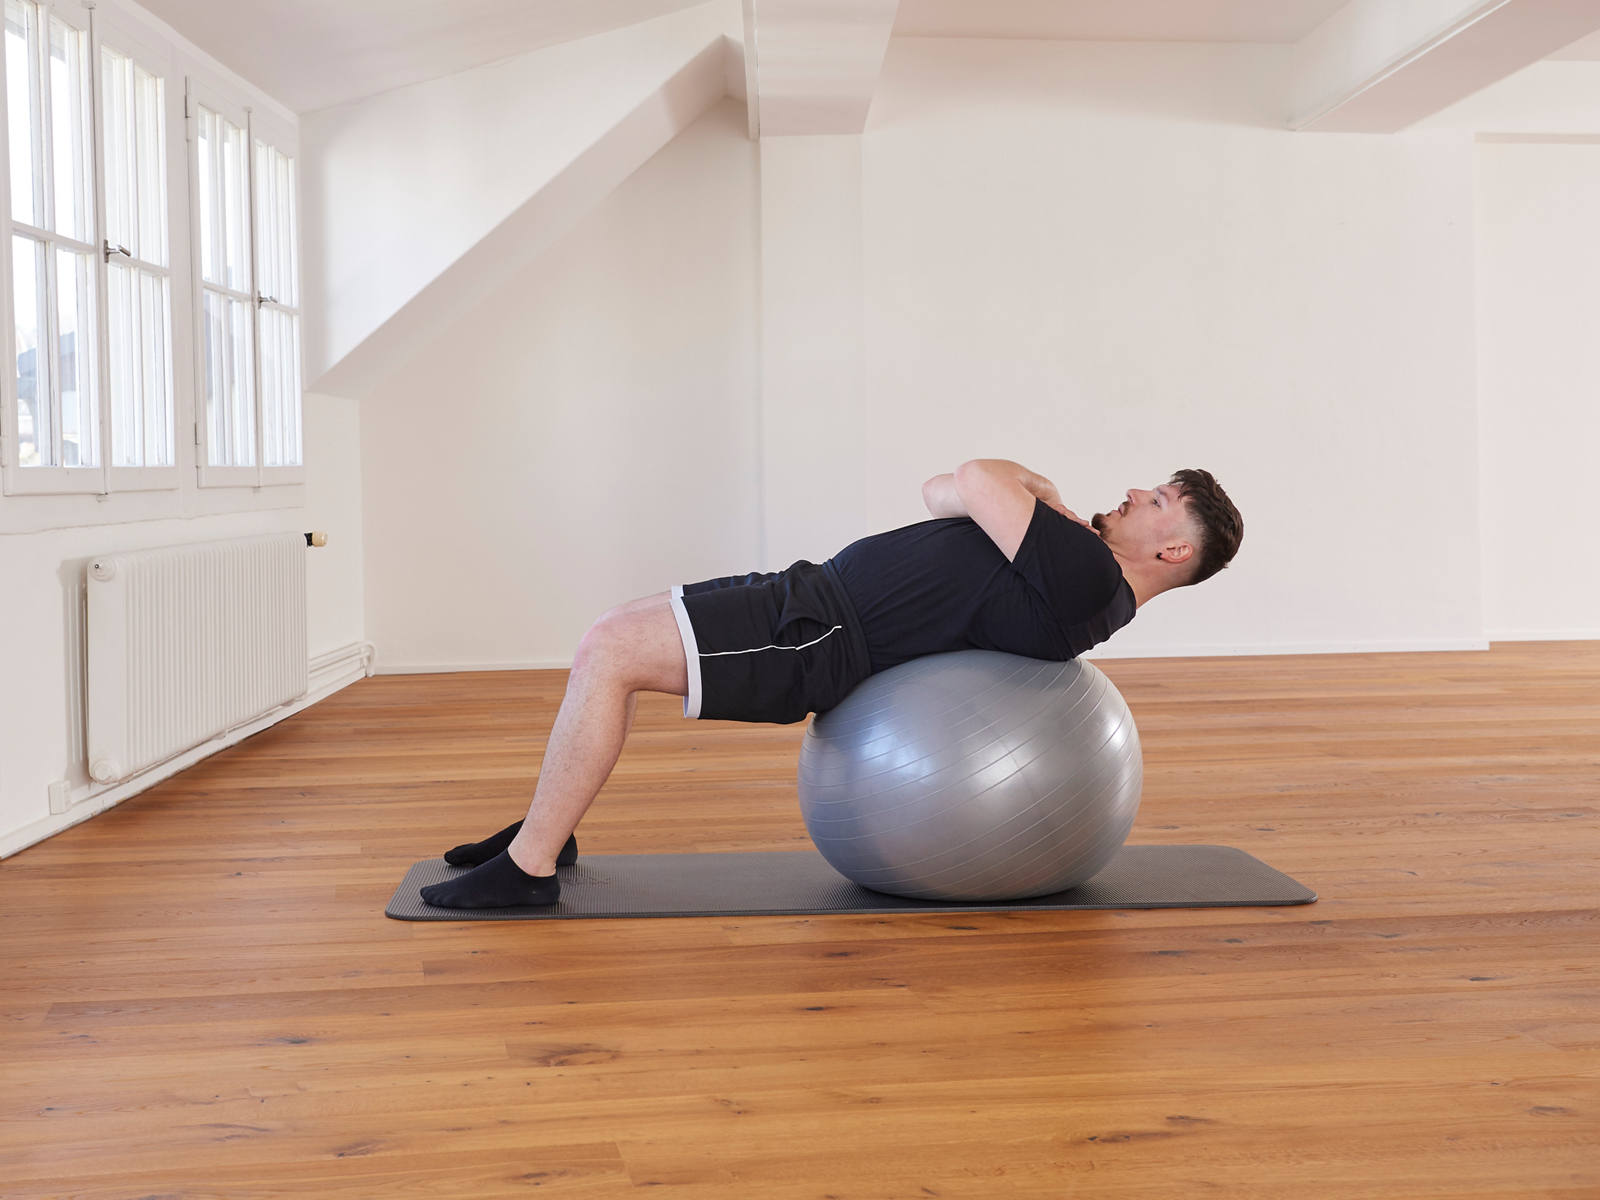 Gymnastic ball – Abdomen muscles: Position 1